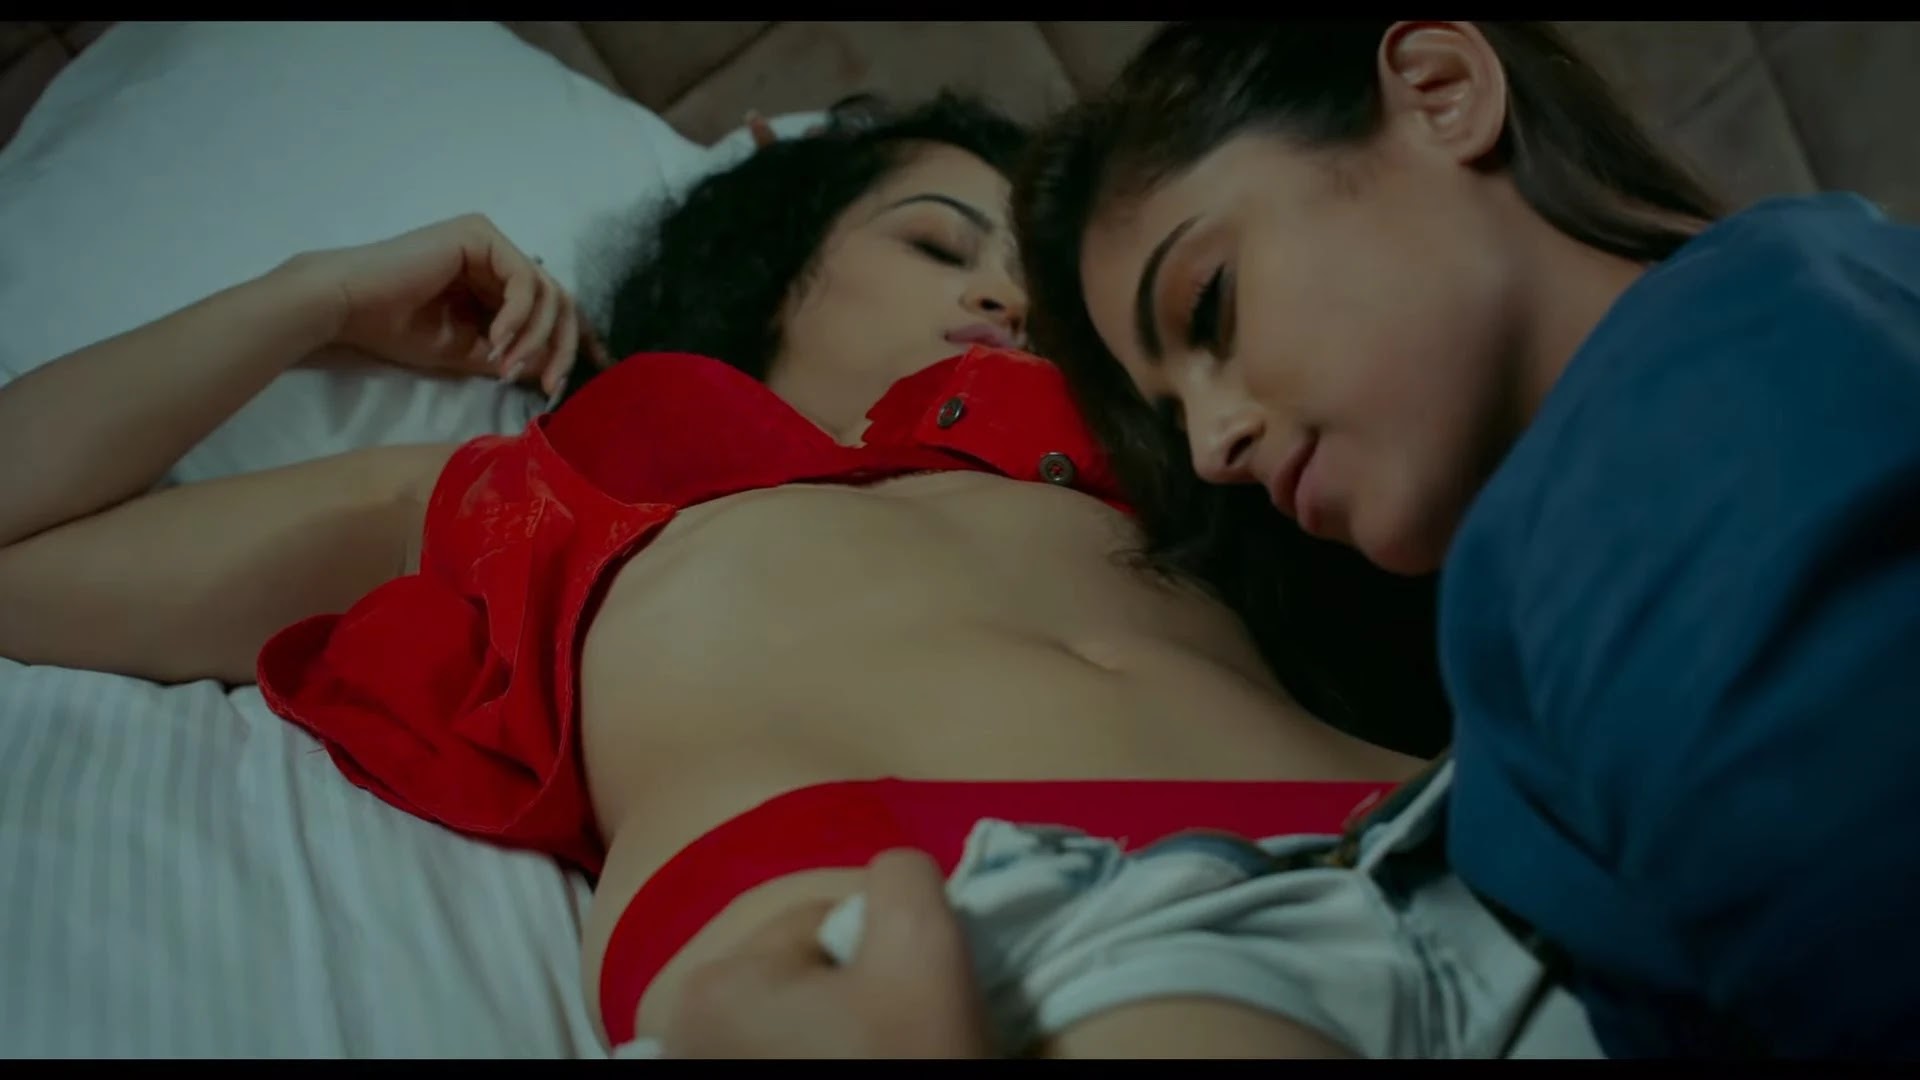 RGV's Dangerous - first Indian 'lesbian' crime action film. Watch full trailer.